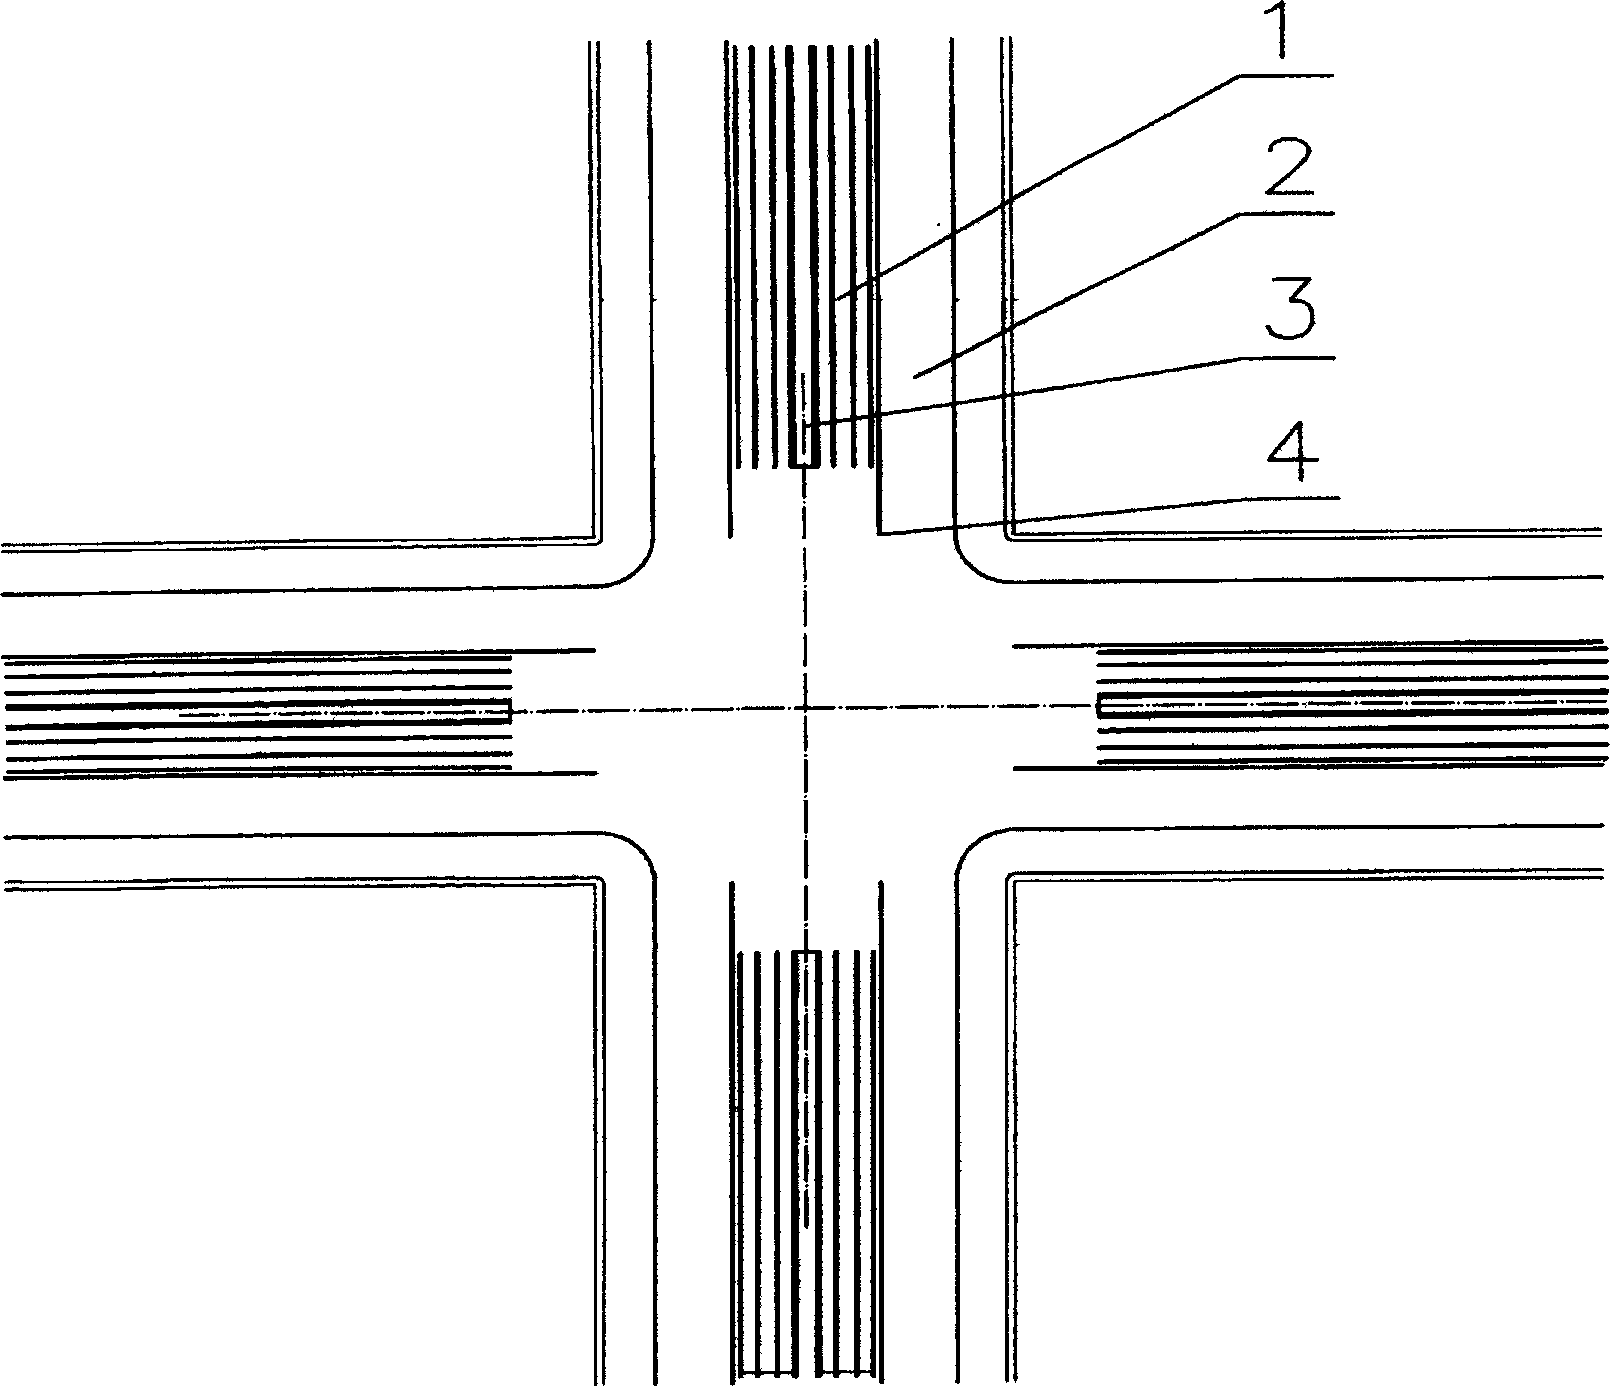 Road-rail composite traffic system